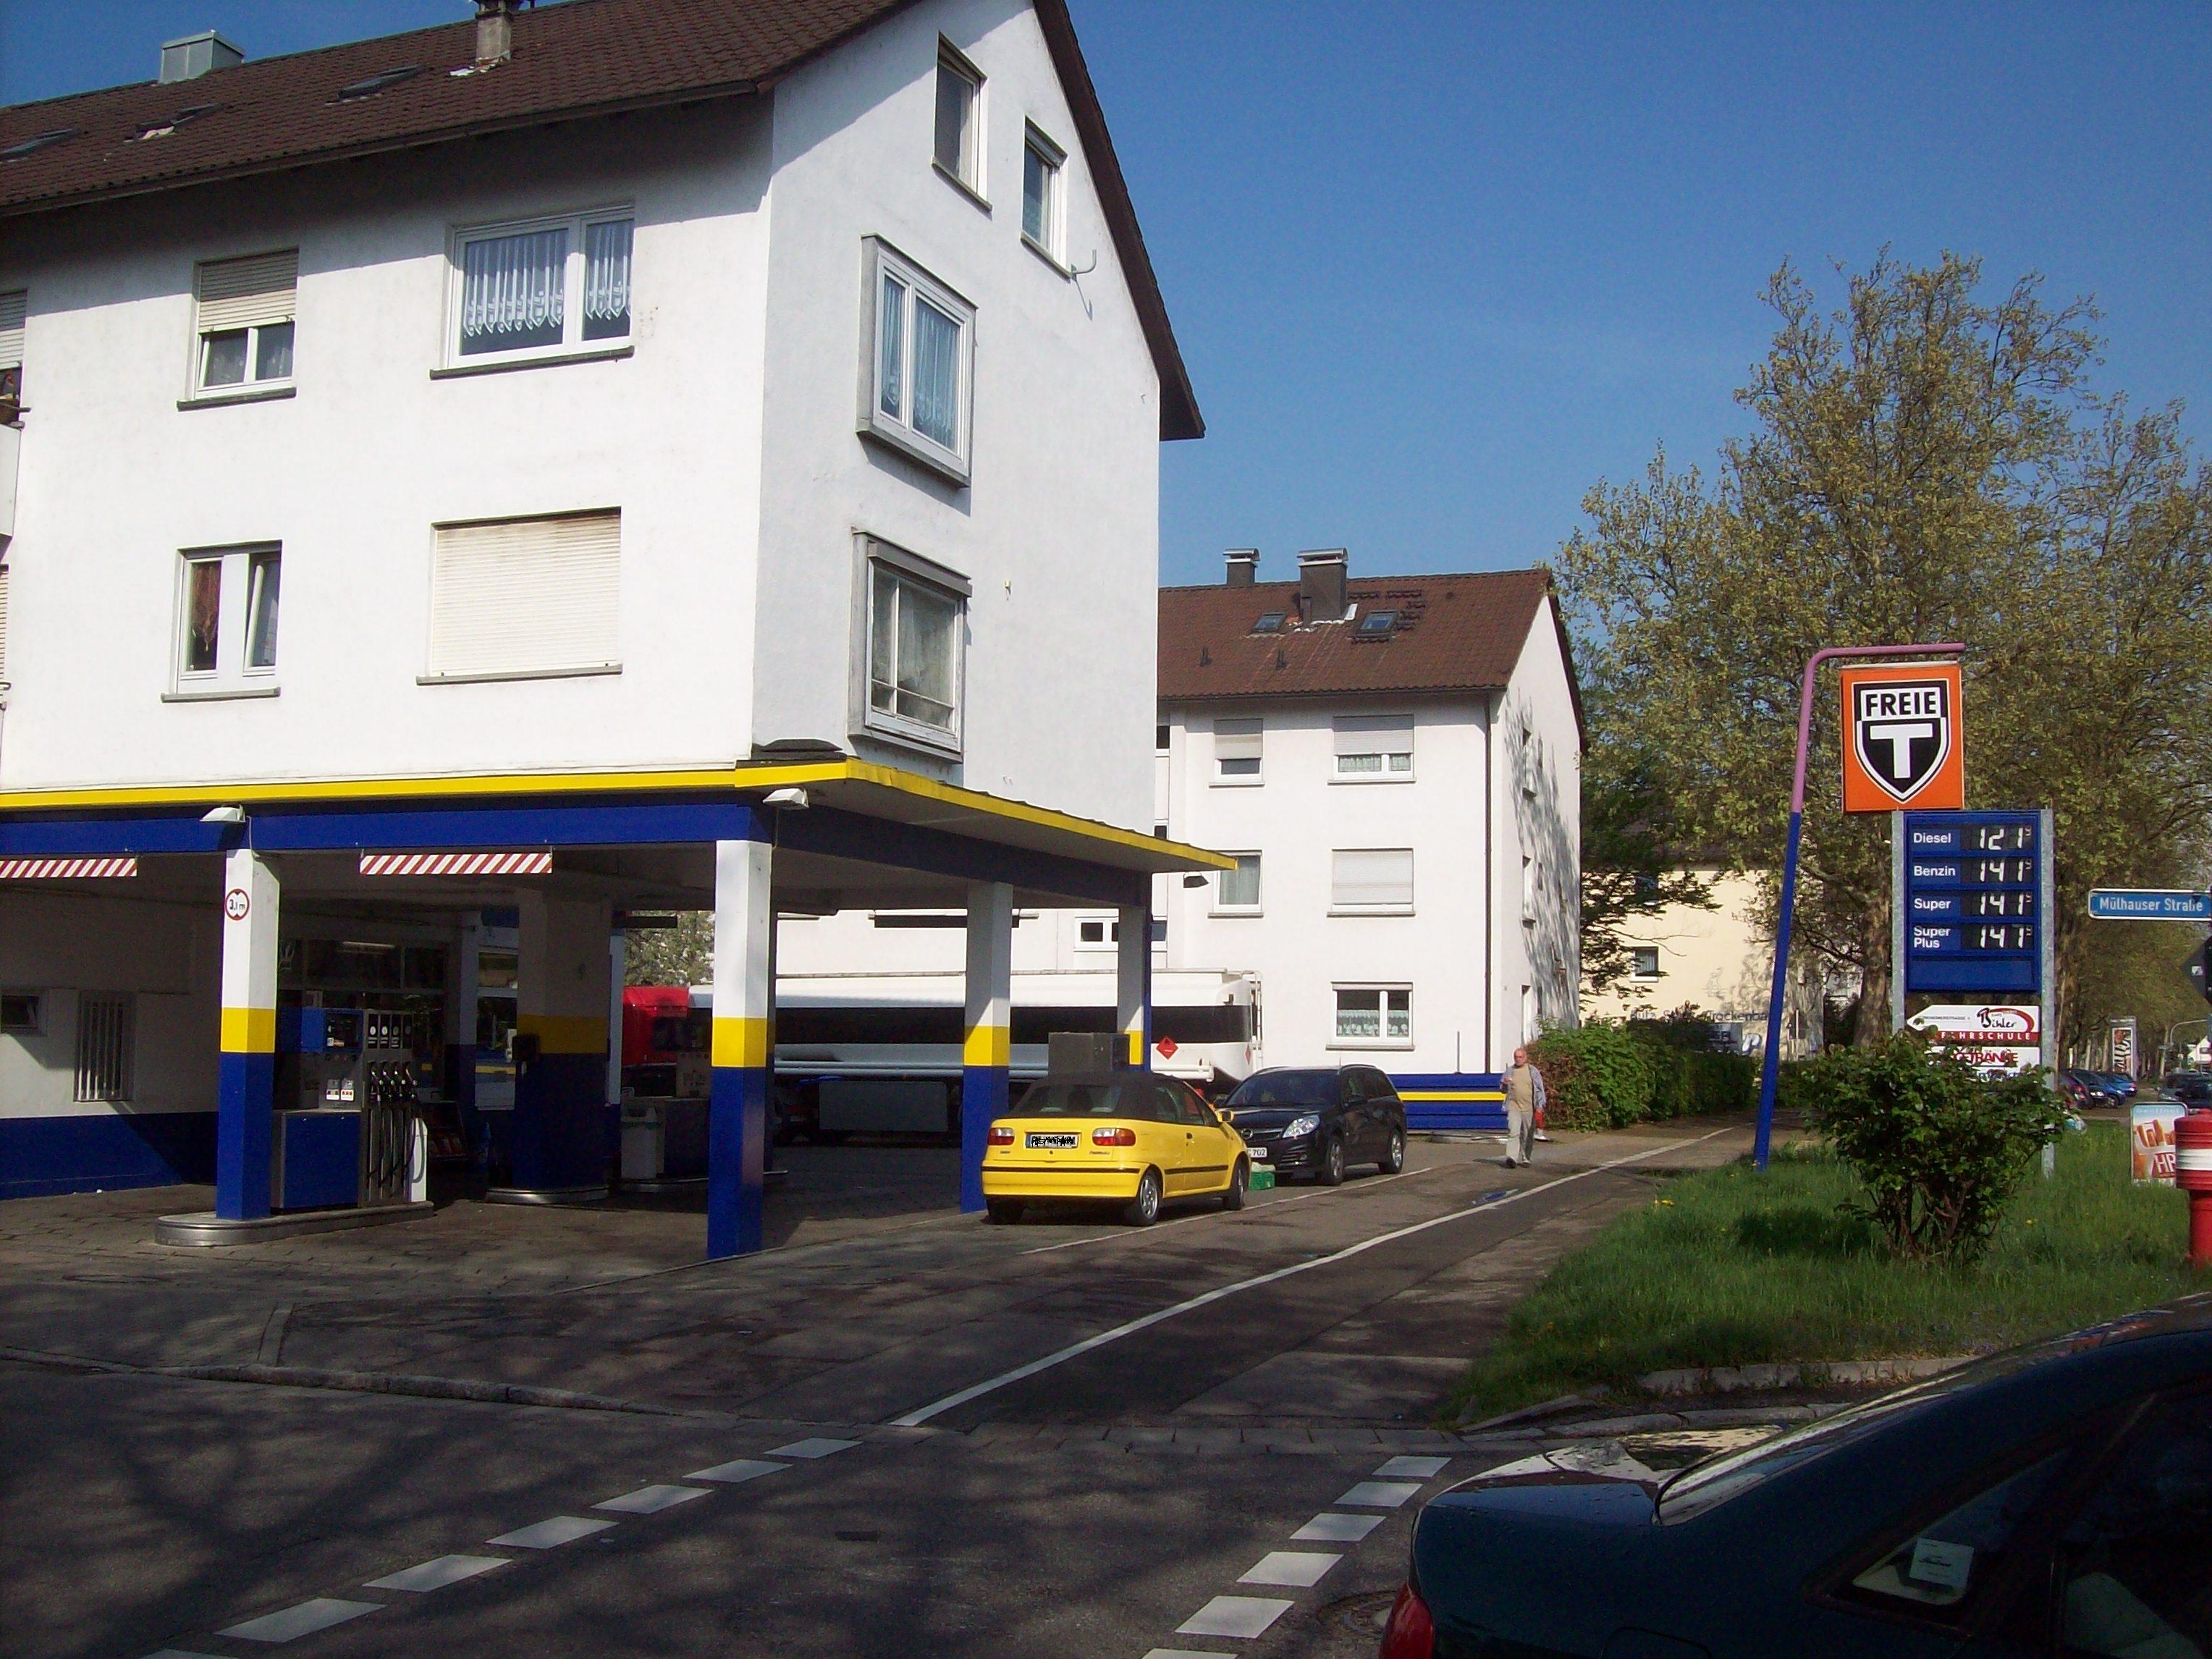 Bild 2 Freie Tankstelle, Zajelsnik Alexander in Freiburg im Breisgau